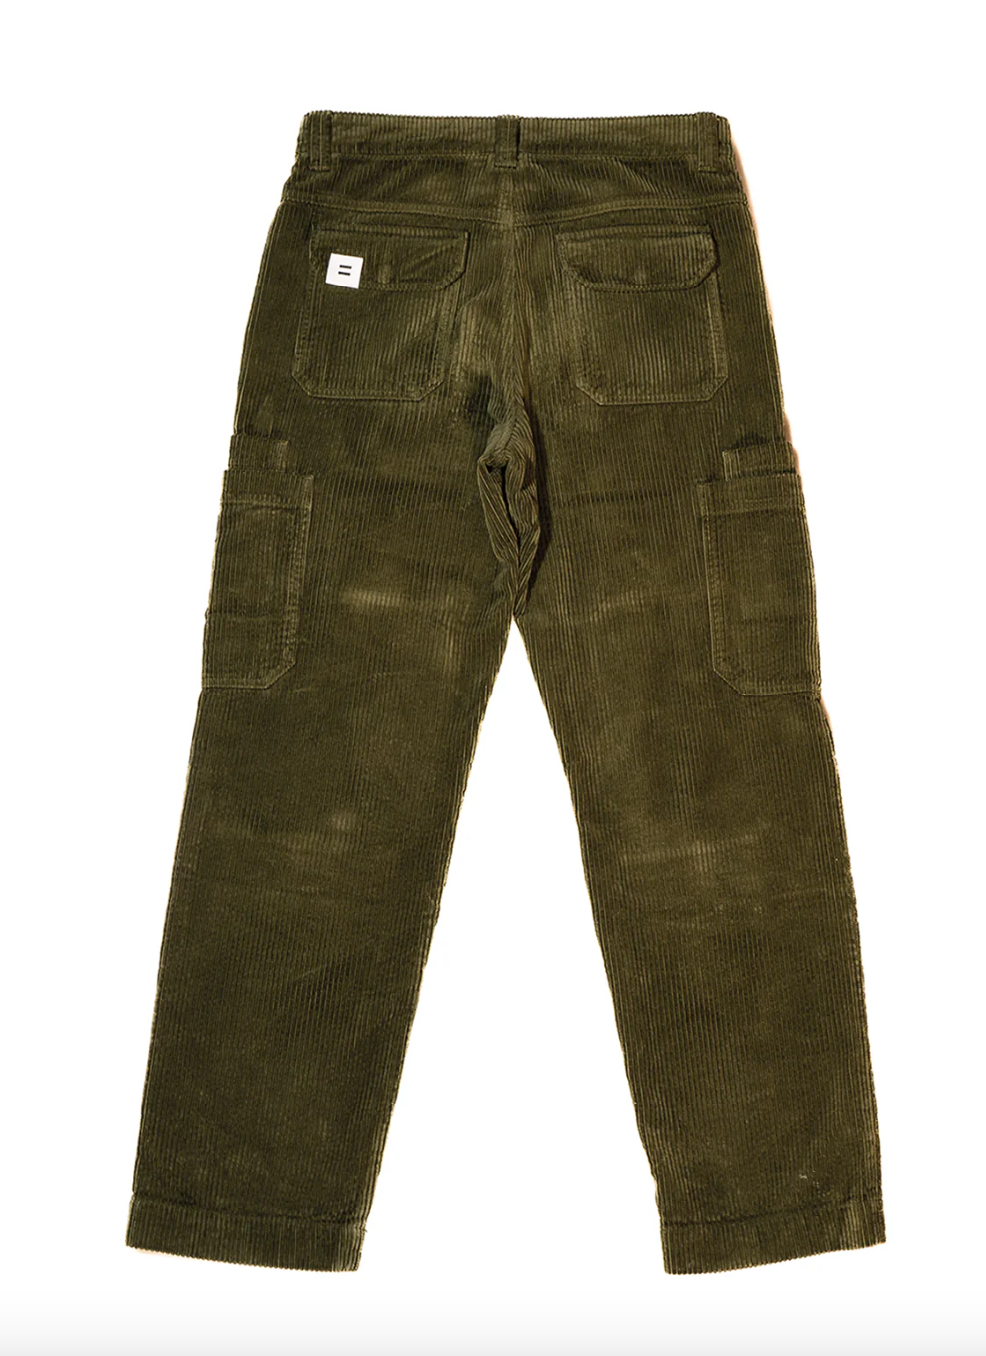 Pantalon cargo vert olive - M/38